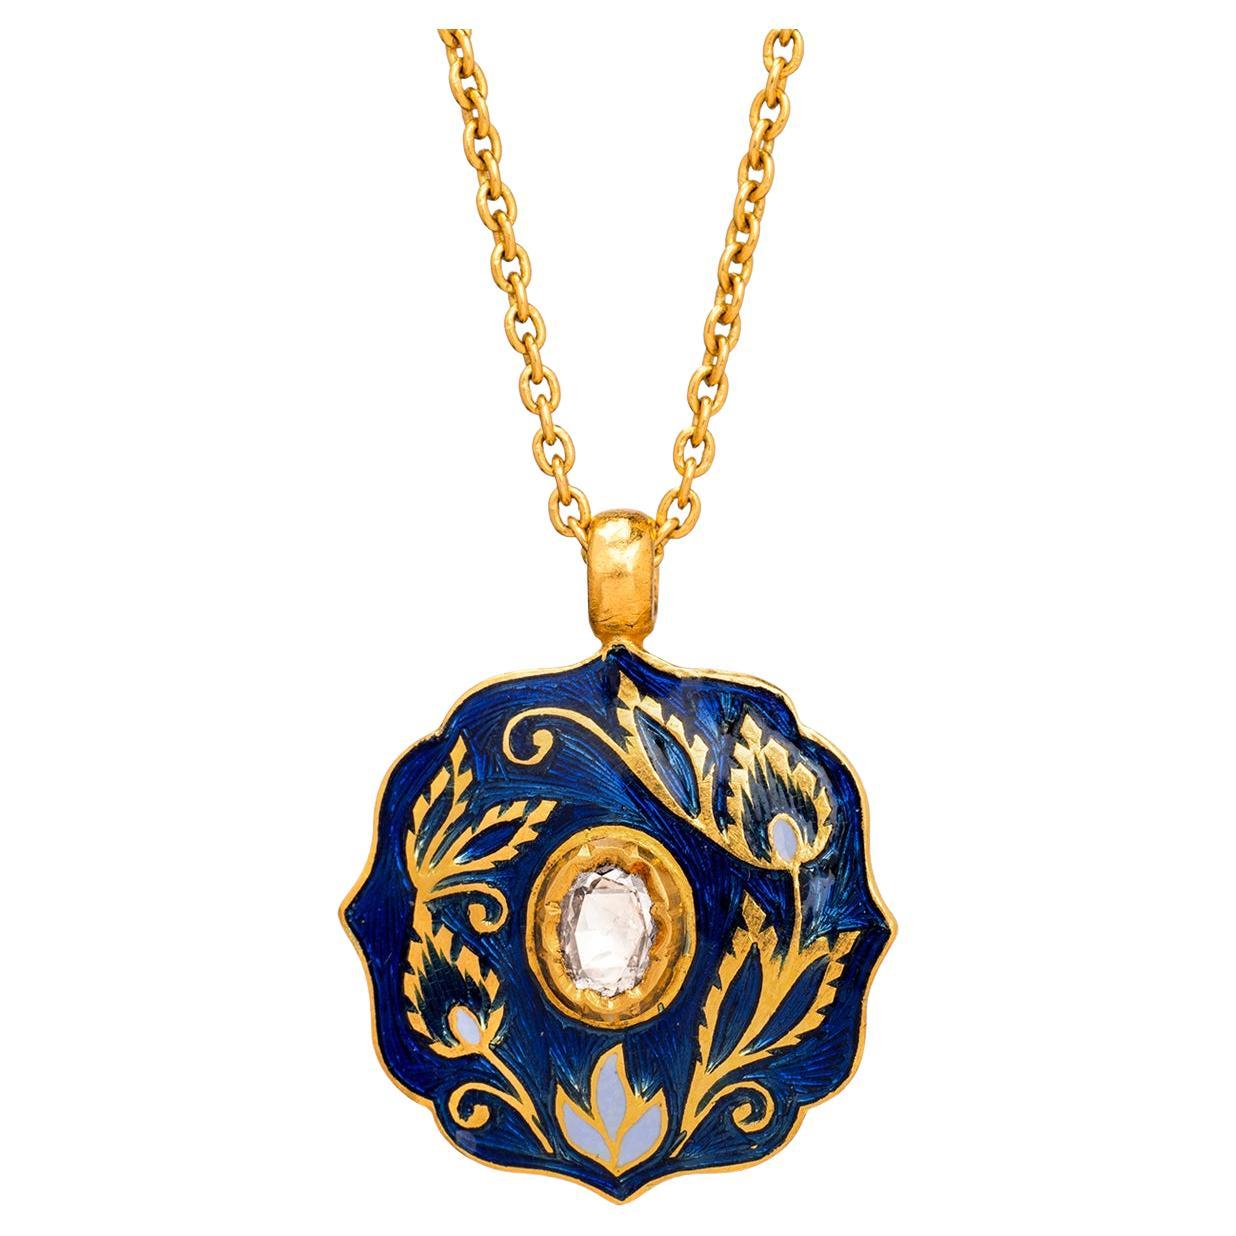 Artisan 22K Gold Rose Cut Diamond Blue Floral Enamel Pendant Necklace Handmade by Agaro